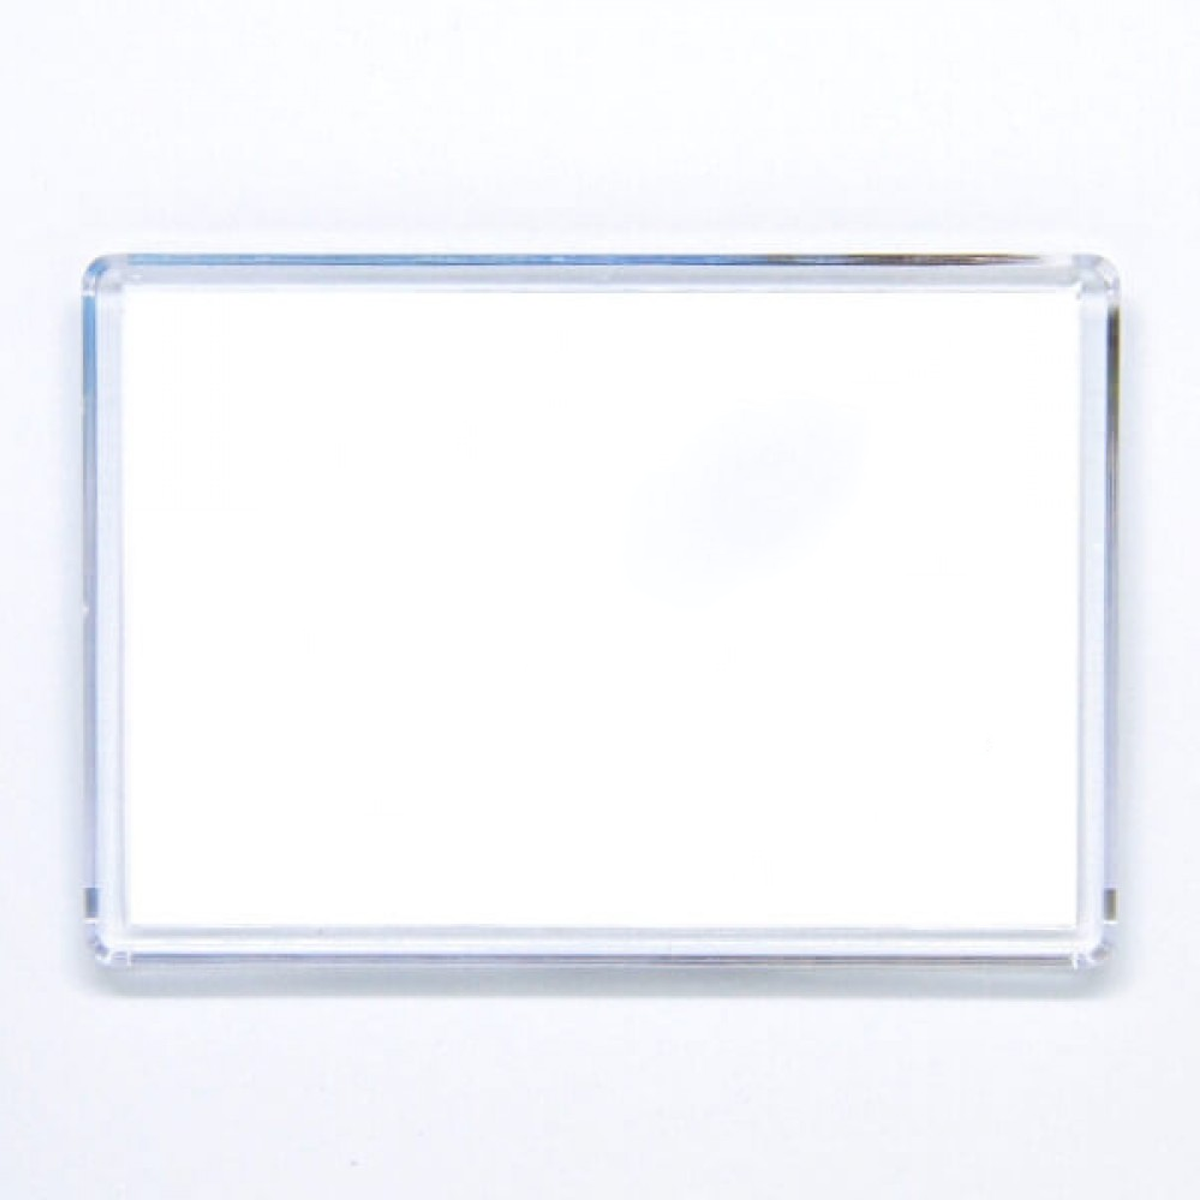 Blank Acrylic Fridge Magnet Frame - 9x6 Cms / 12Pcs Pack